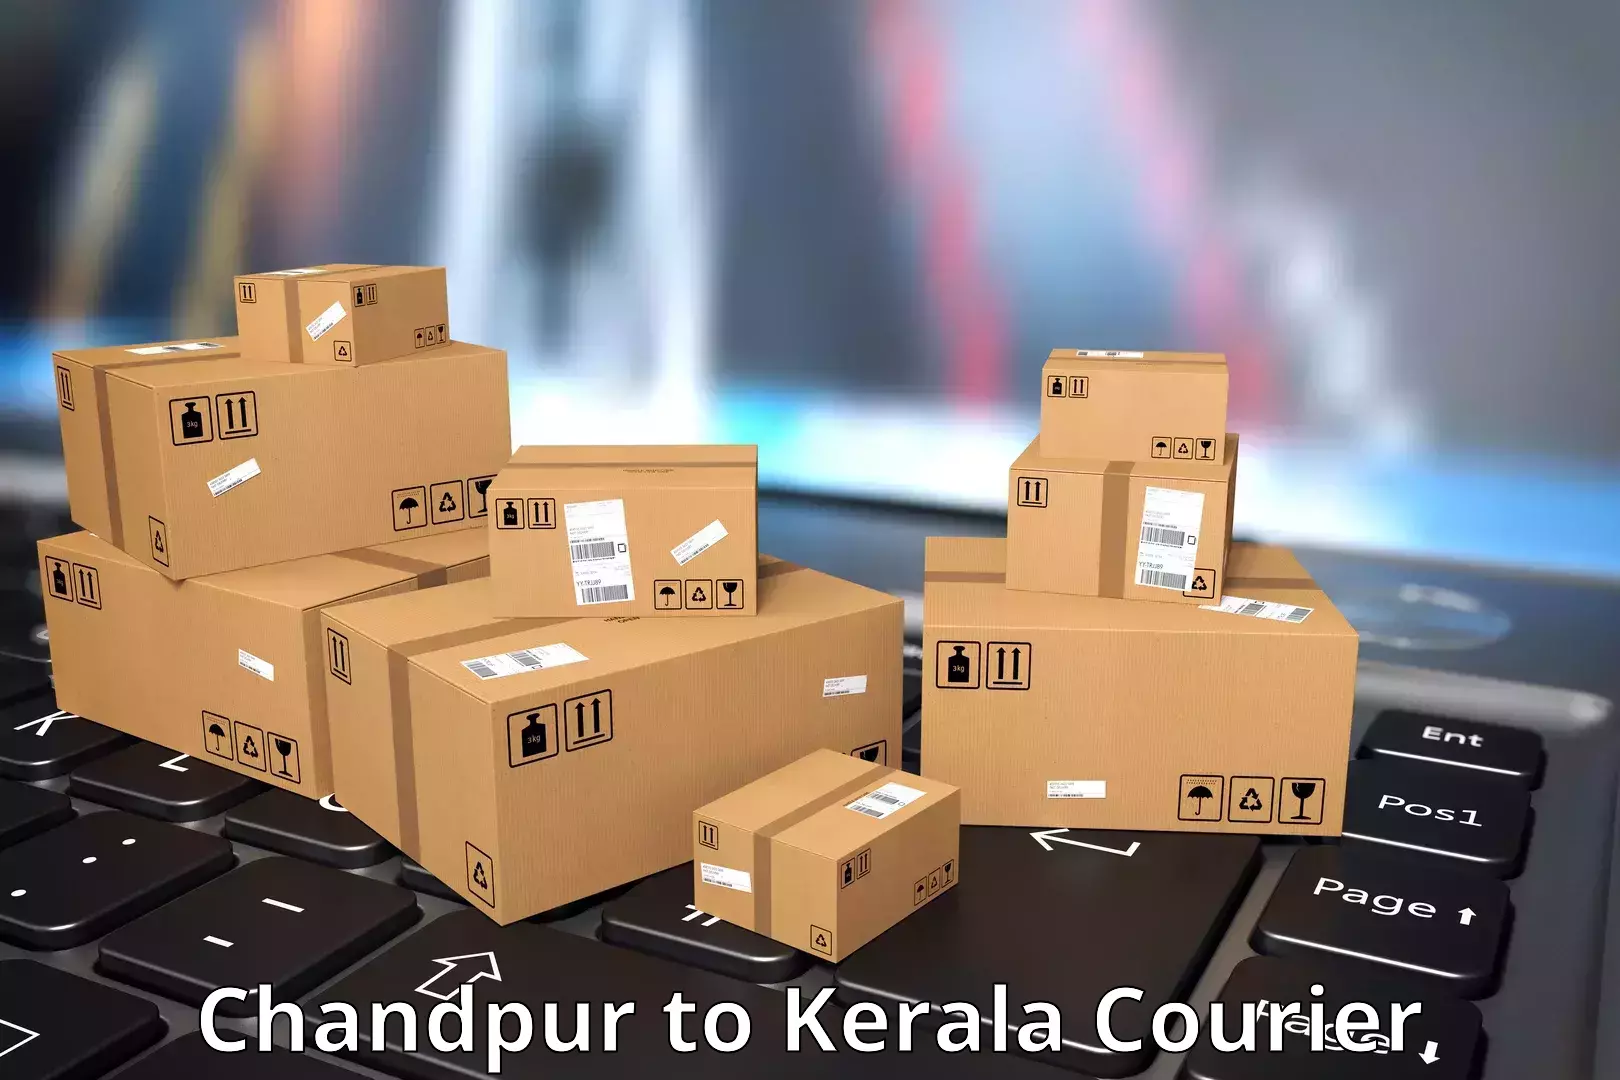 Flexible delivery schedules Chandpur to Vaikom